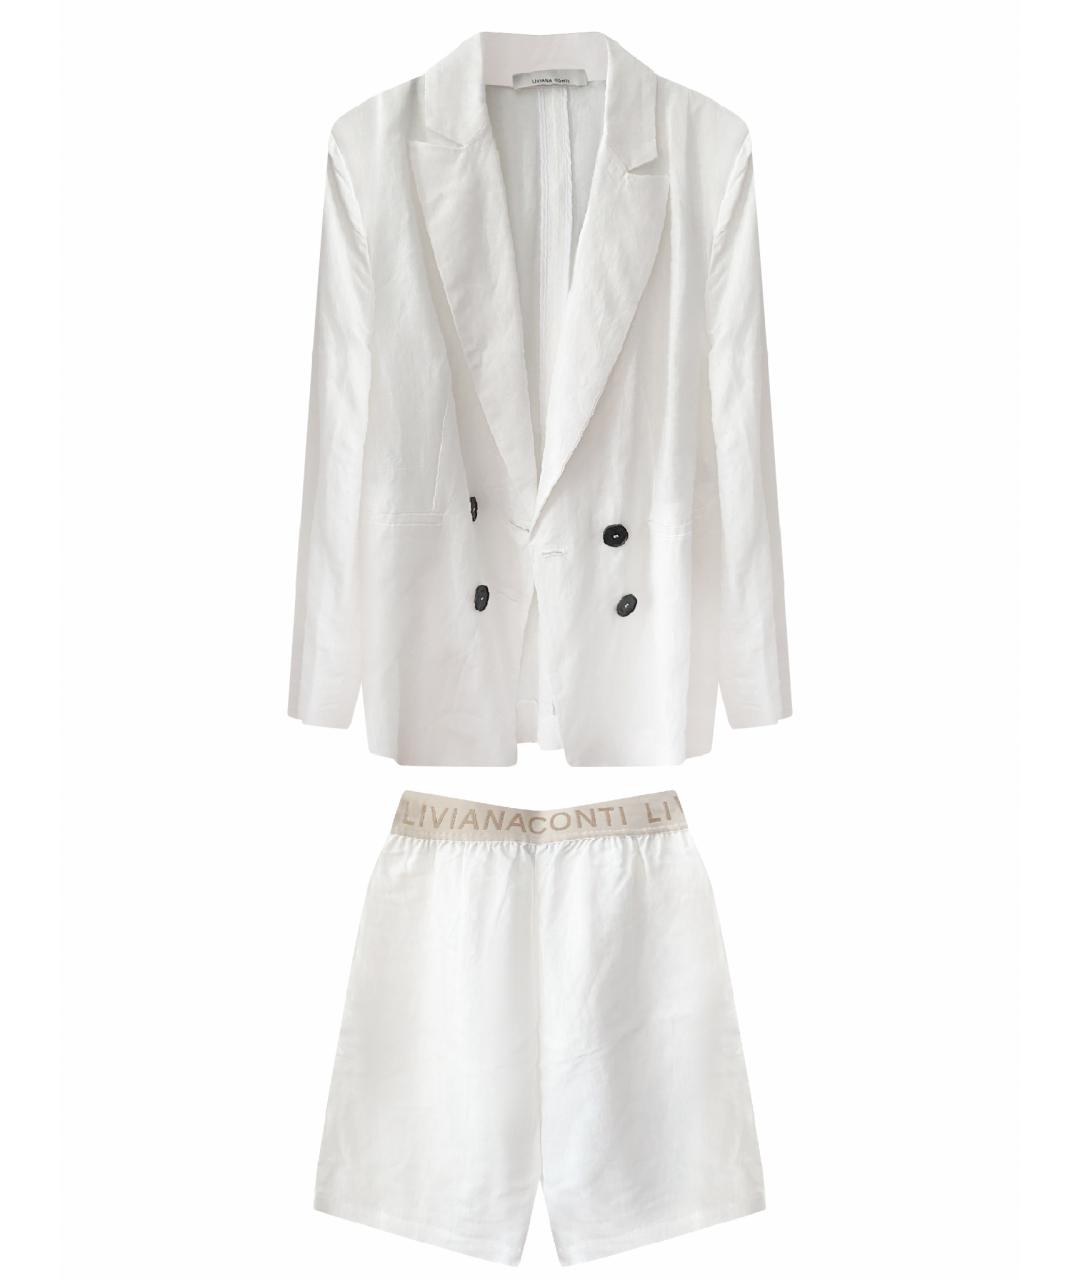 LIVIANA CONTI Белый вискозный костюм с юбками, фото 1